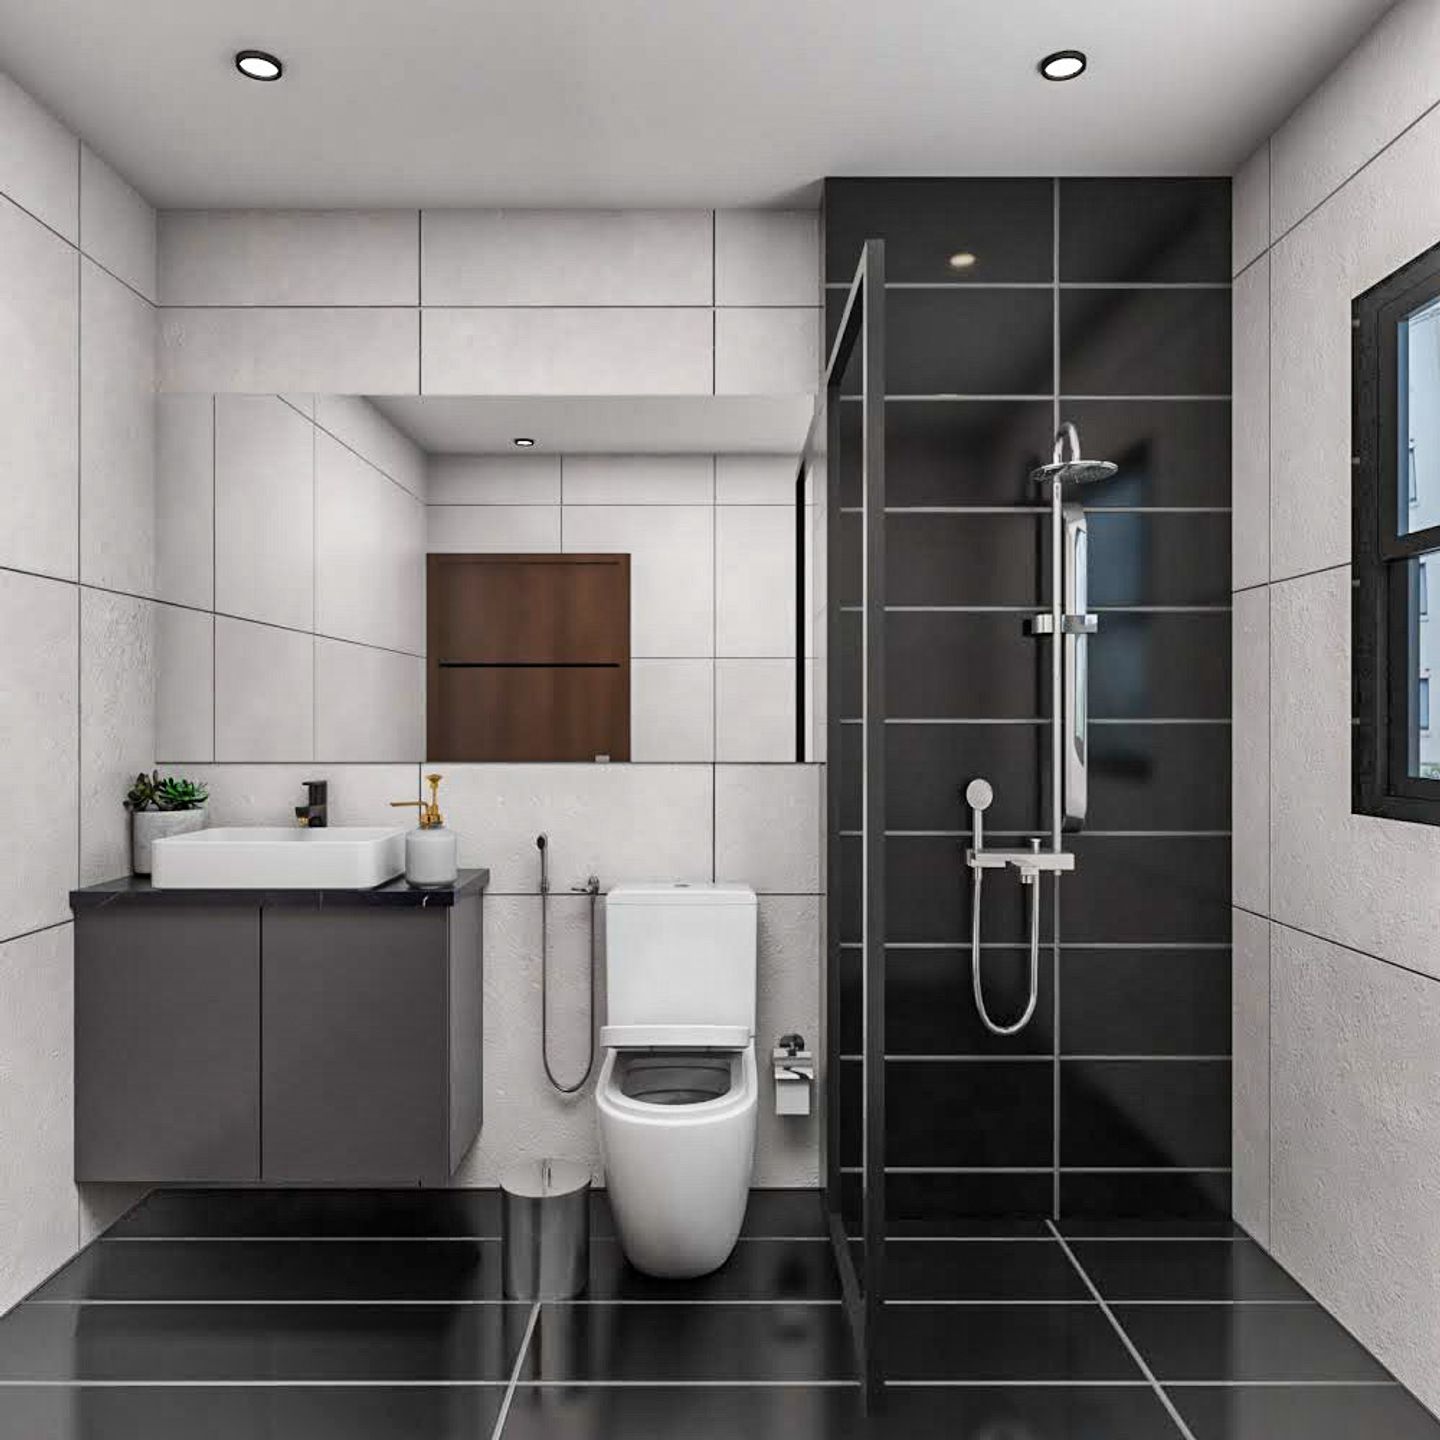 Small Bathroom Design In Light Grey And Black - Livspace